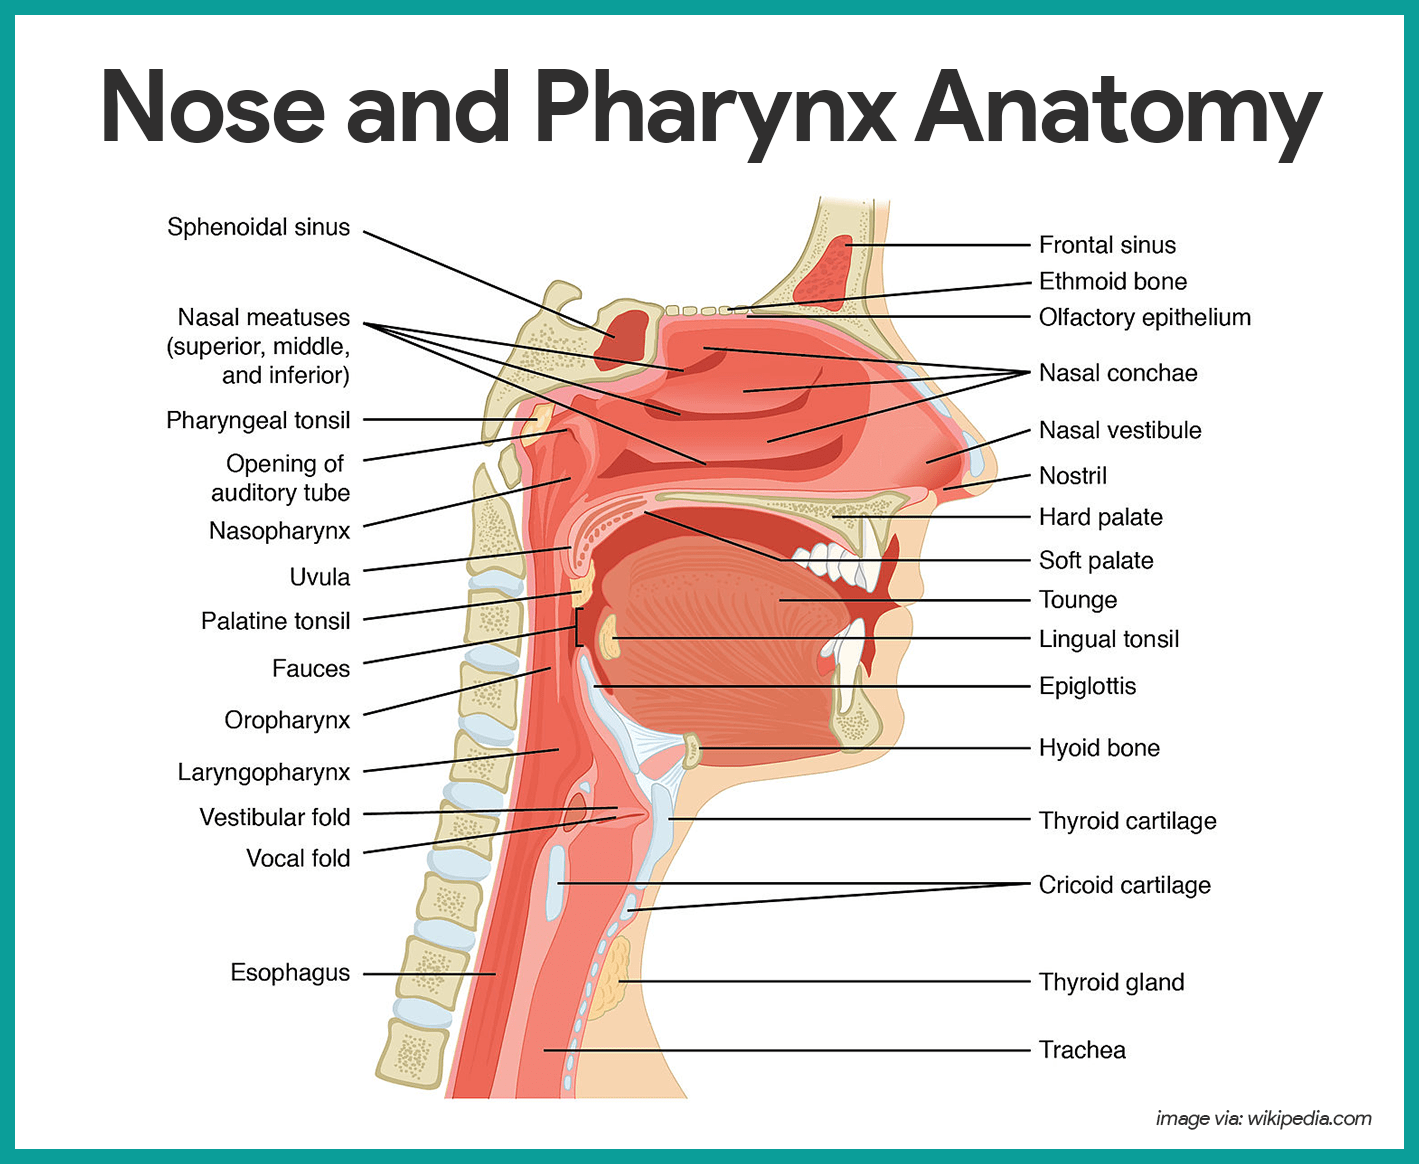 Nose and Pharynx Anatomy-Respiratory System Anatomy and Physiology